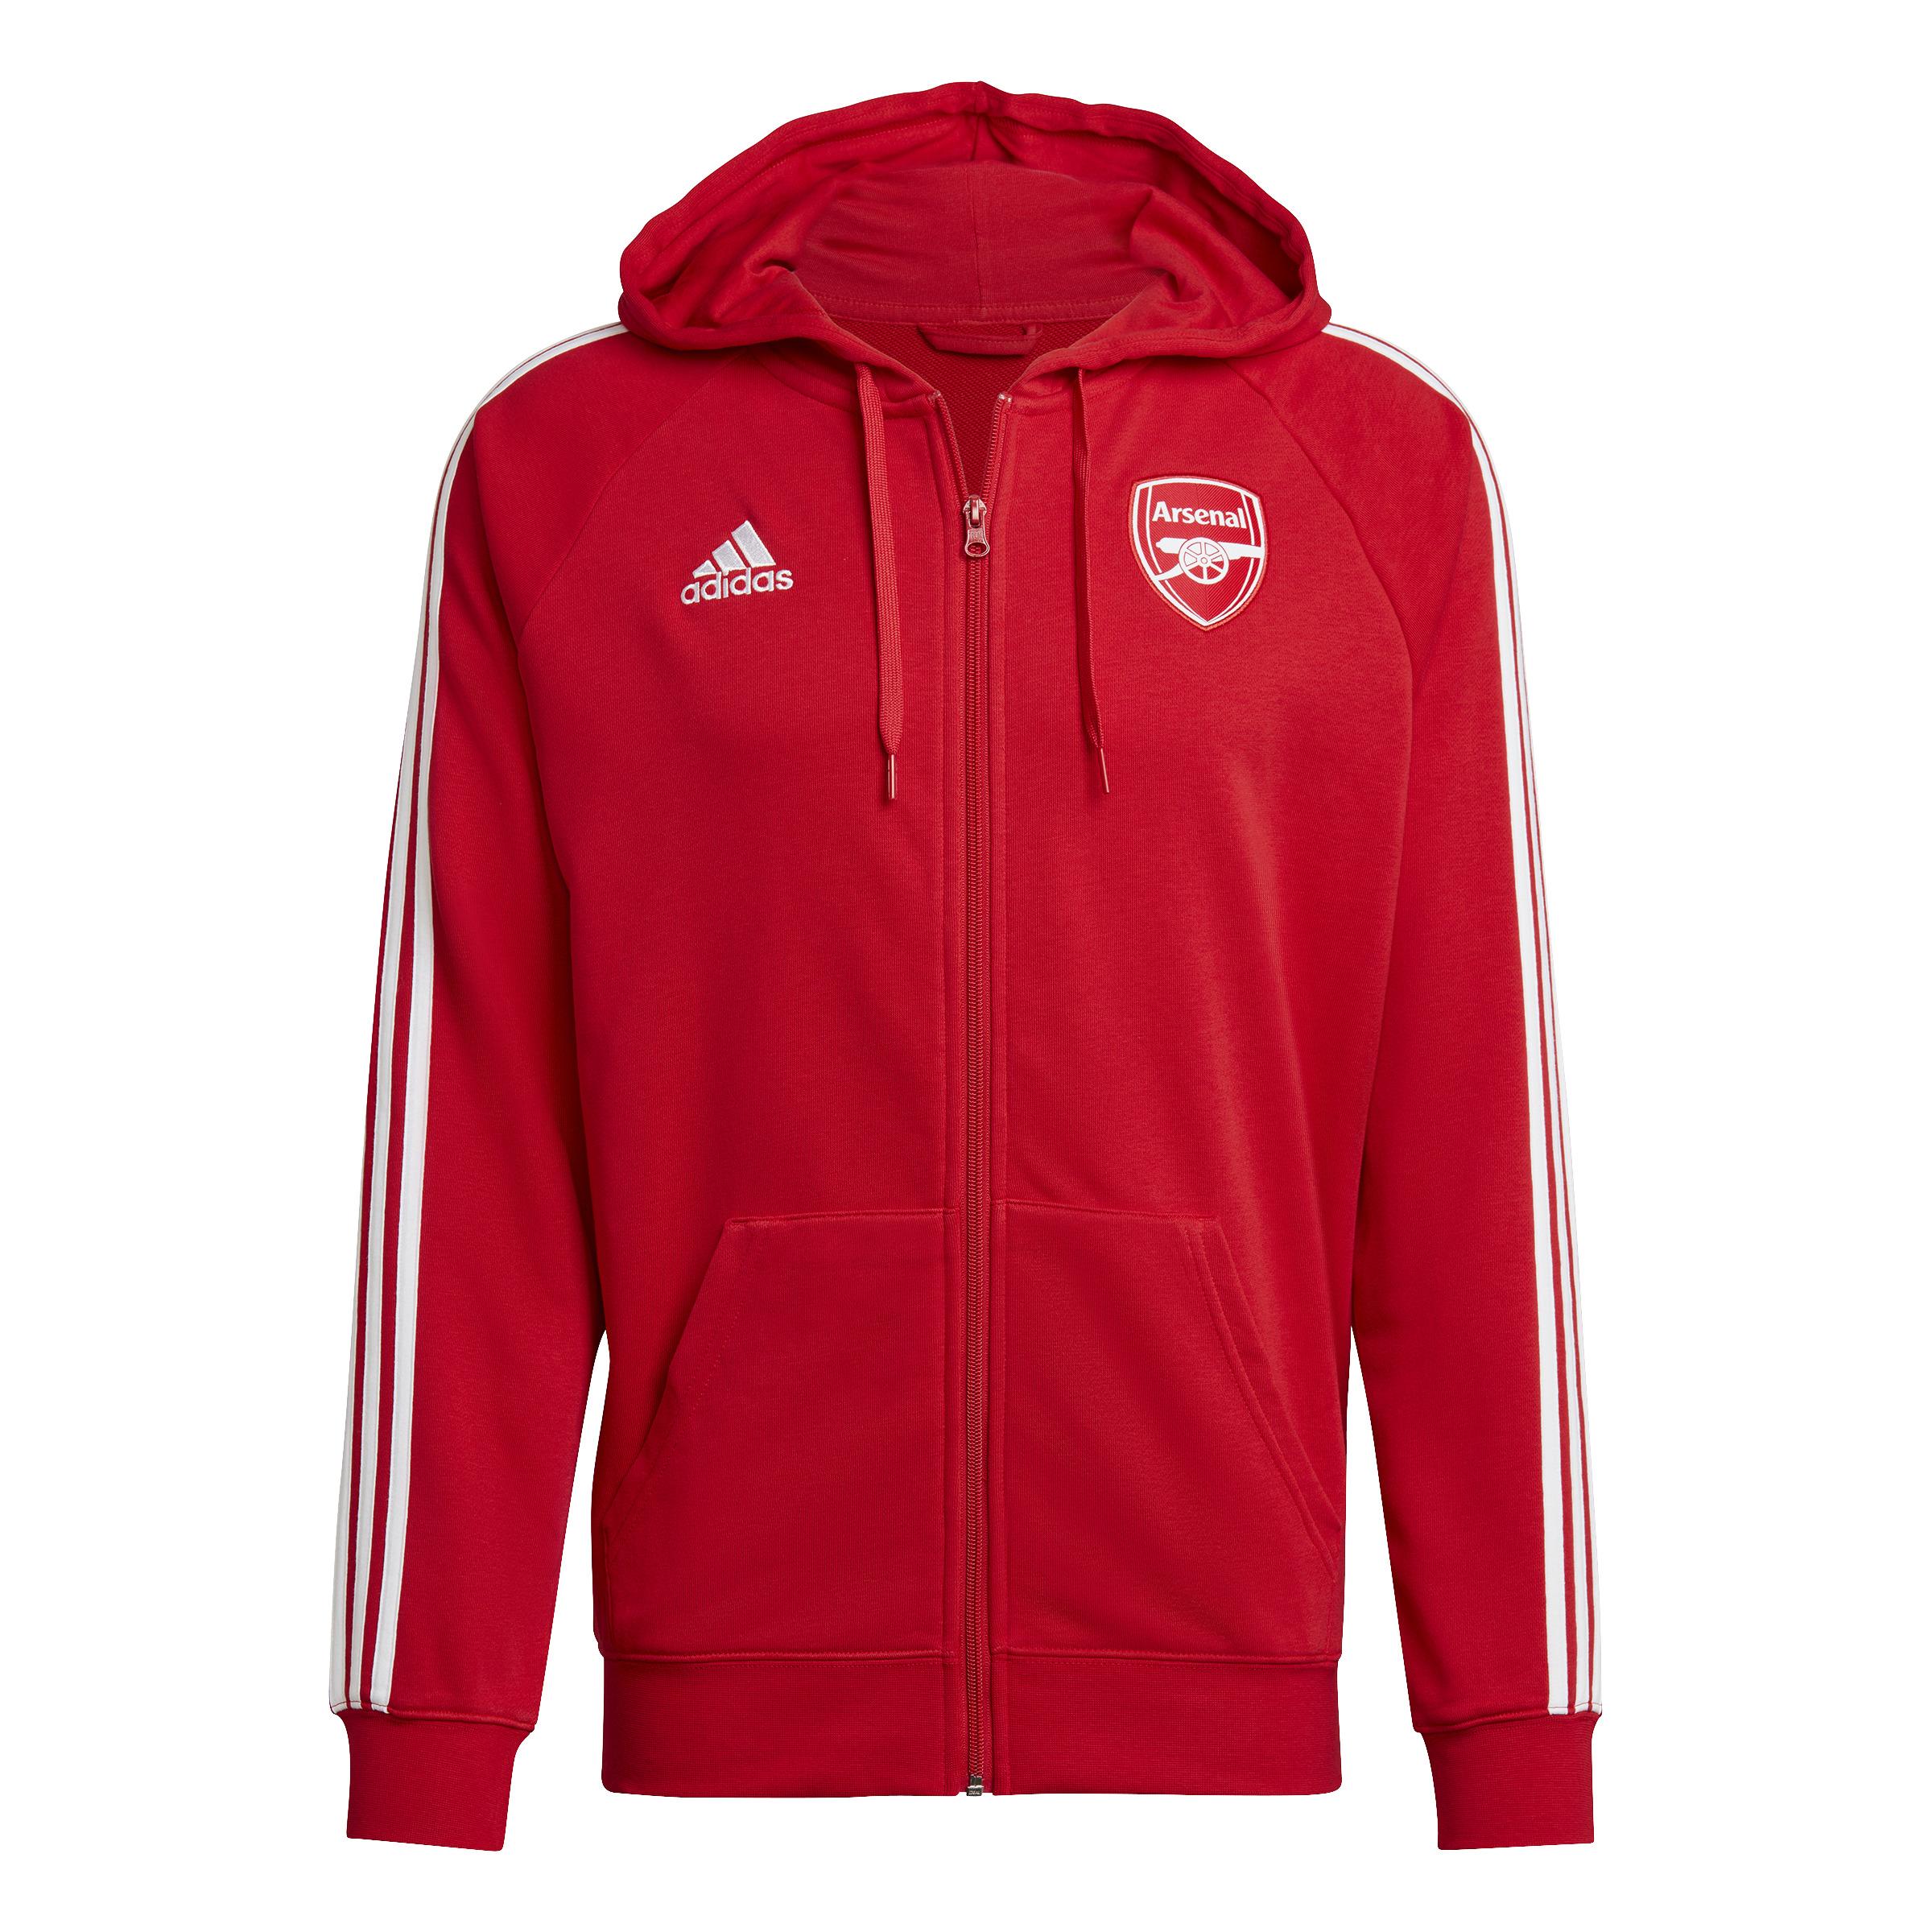 Adidas Sweatshirt Hoody Arsenal